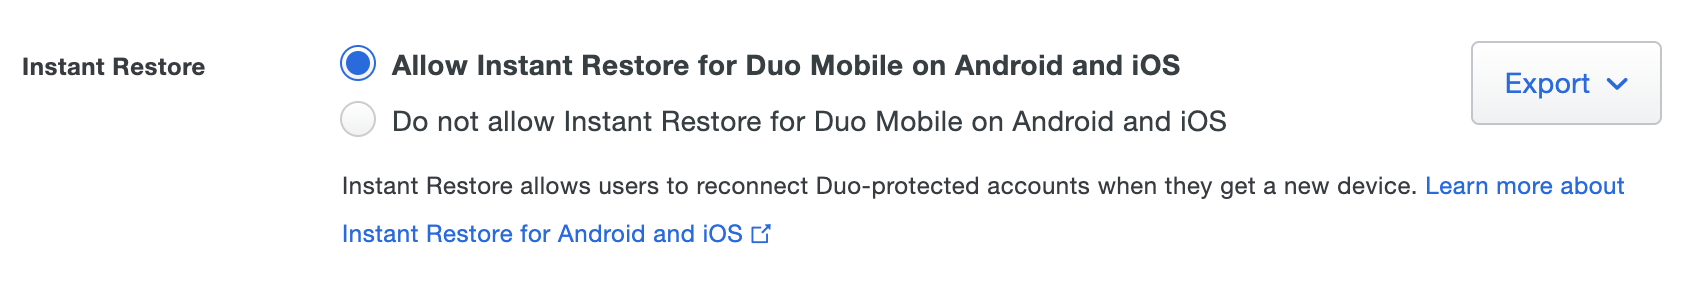 Duo Mobile Instant Restore